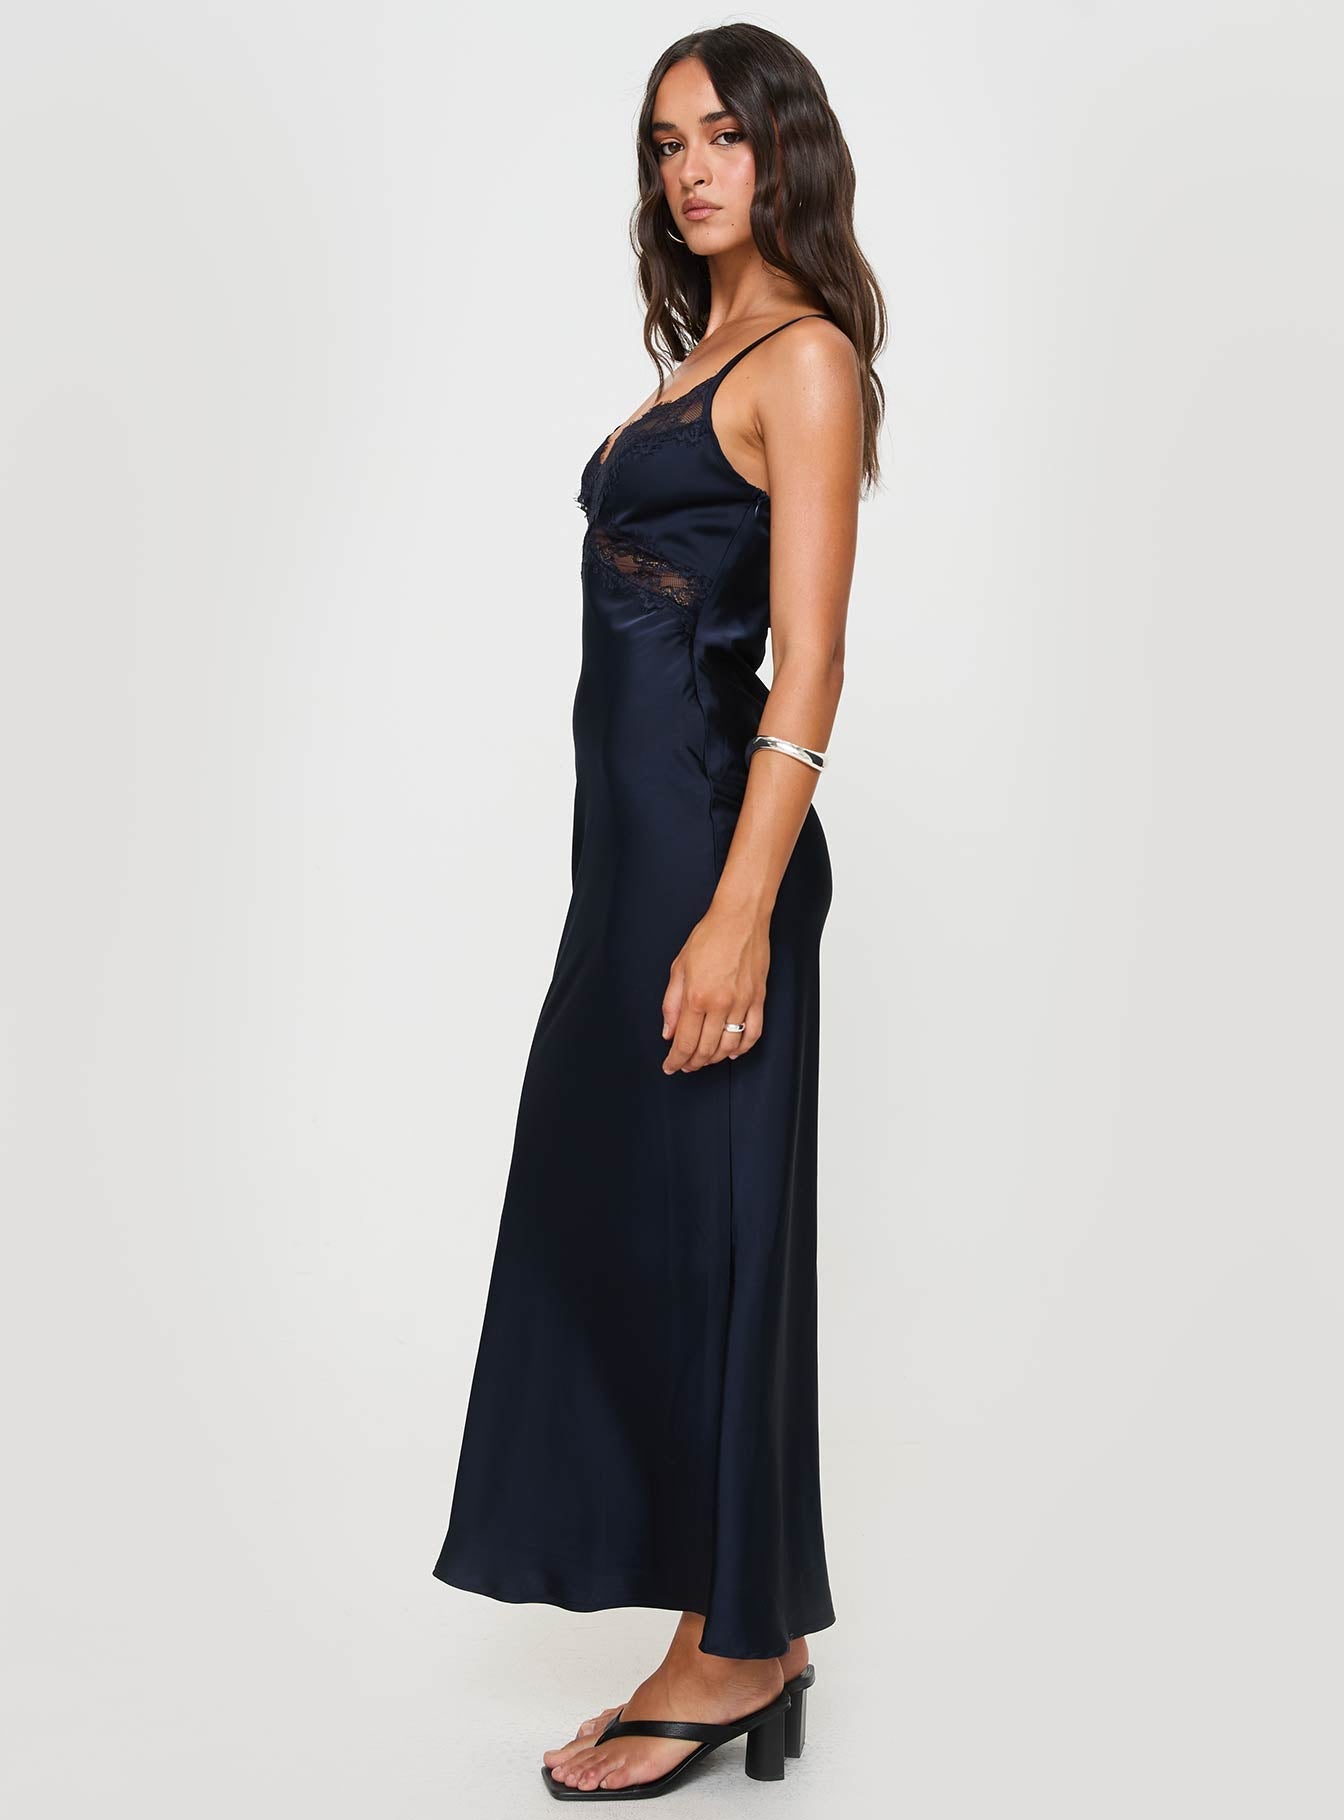 Shop Formal Dress - Treasure Bias Cut Maxi Dress Navy sixth image